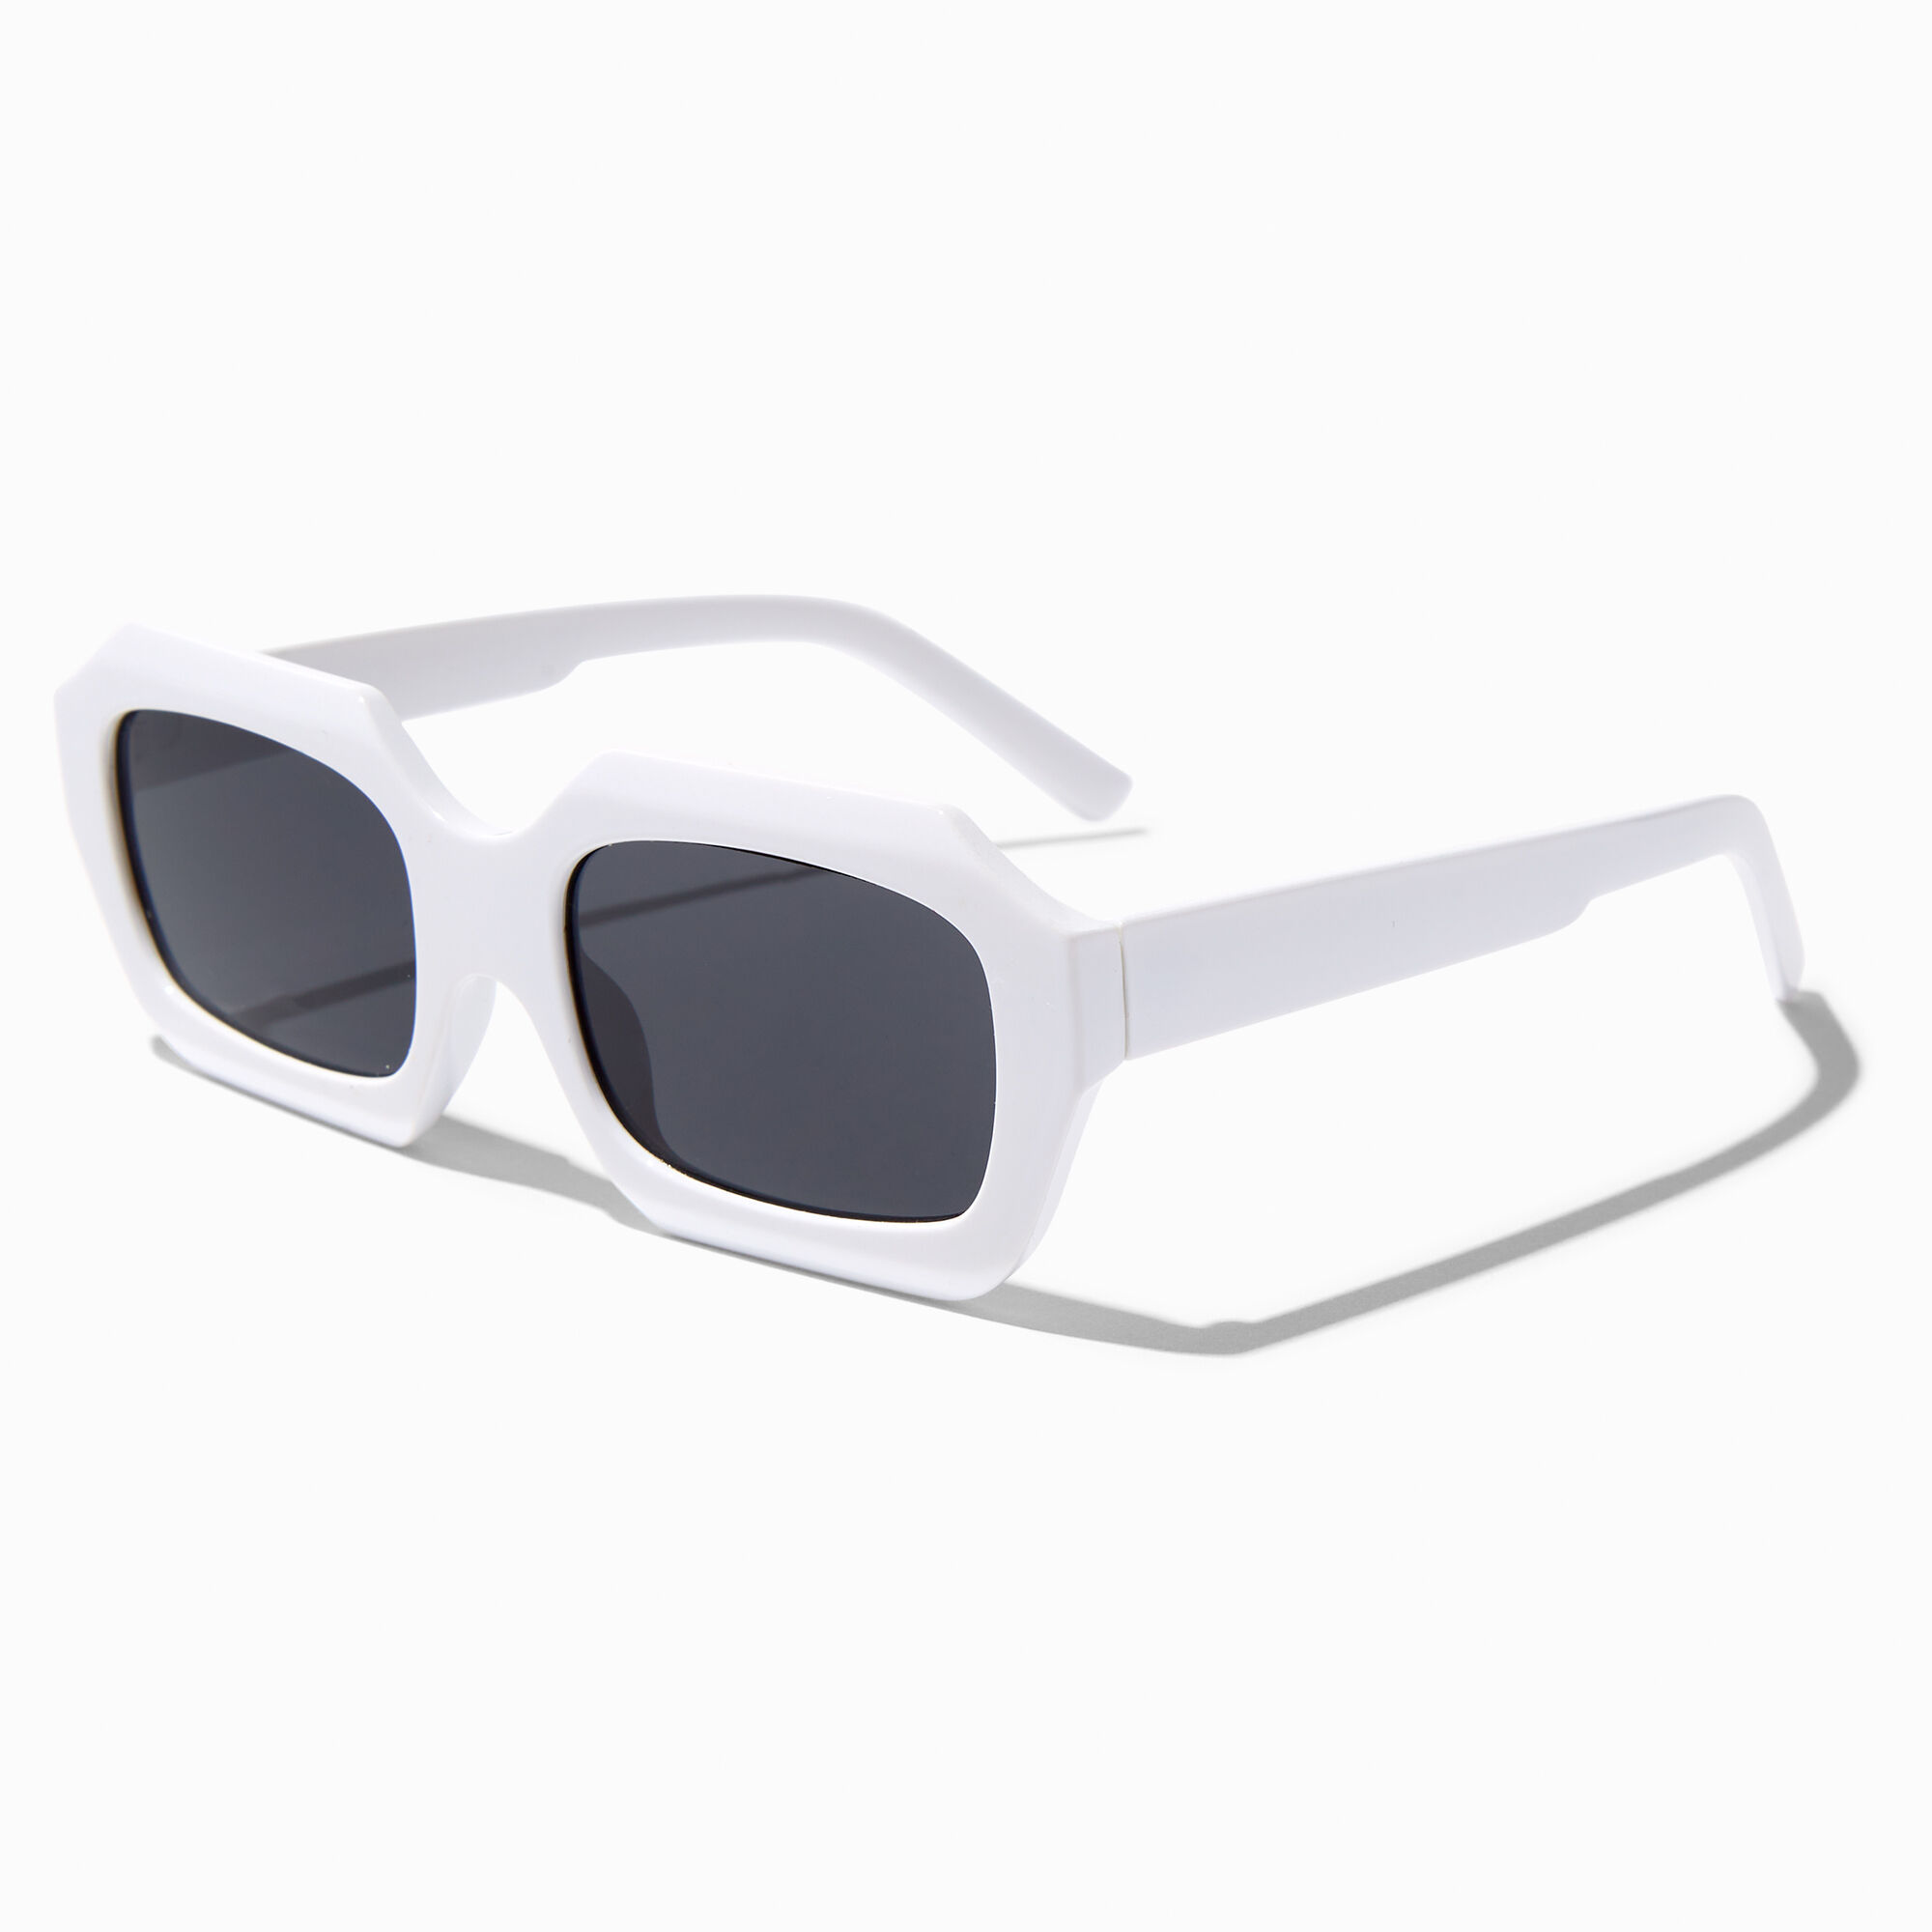 View Claires Retro Geometric Sunglasses White information